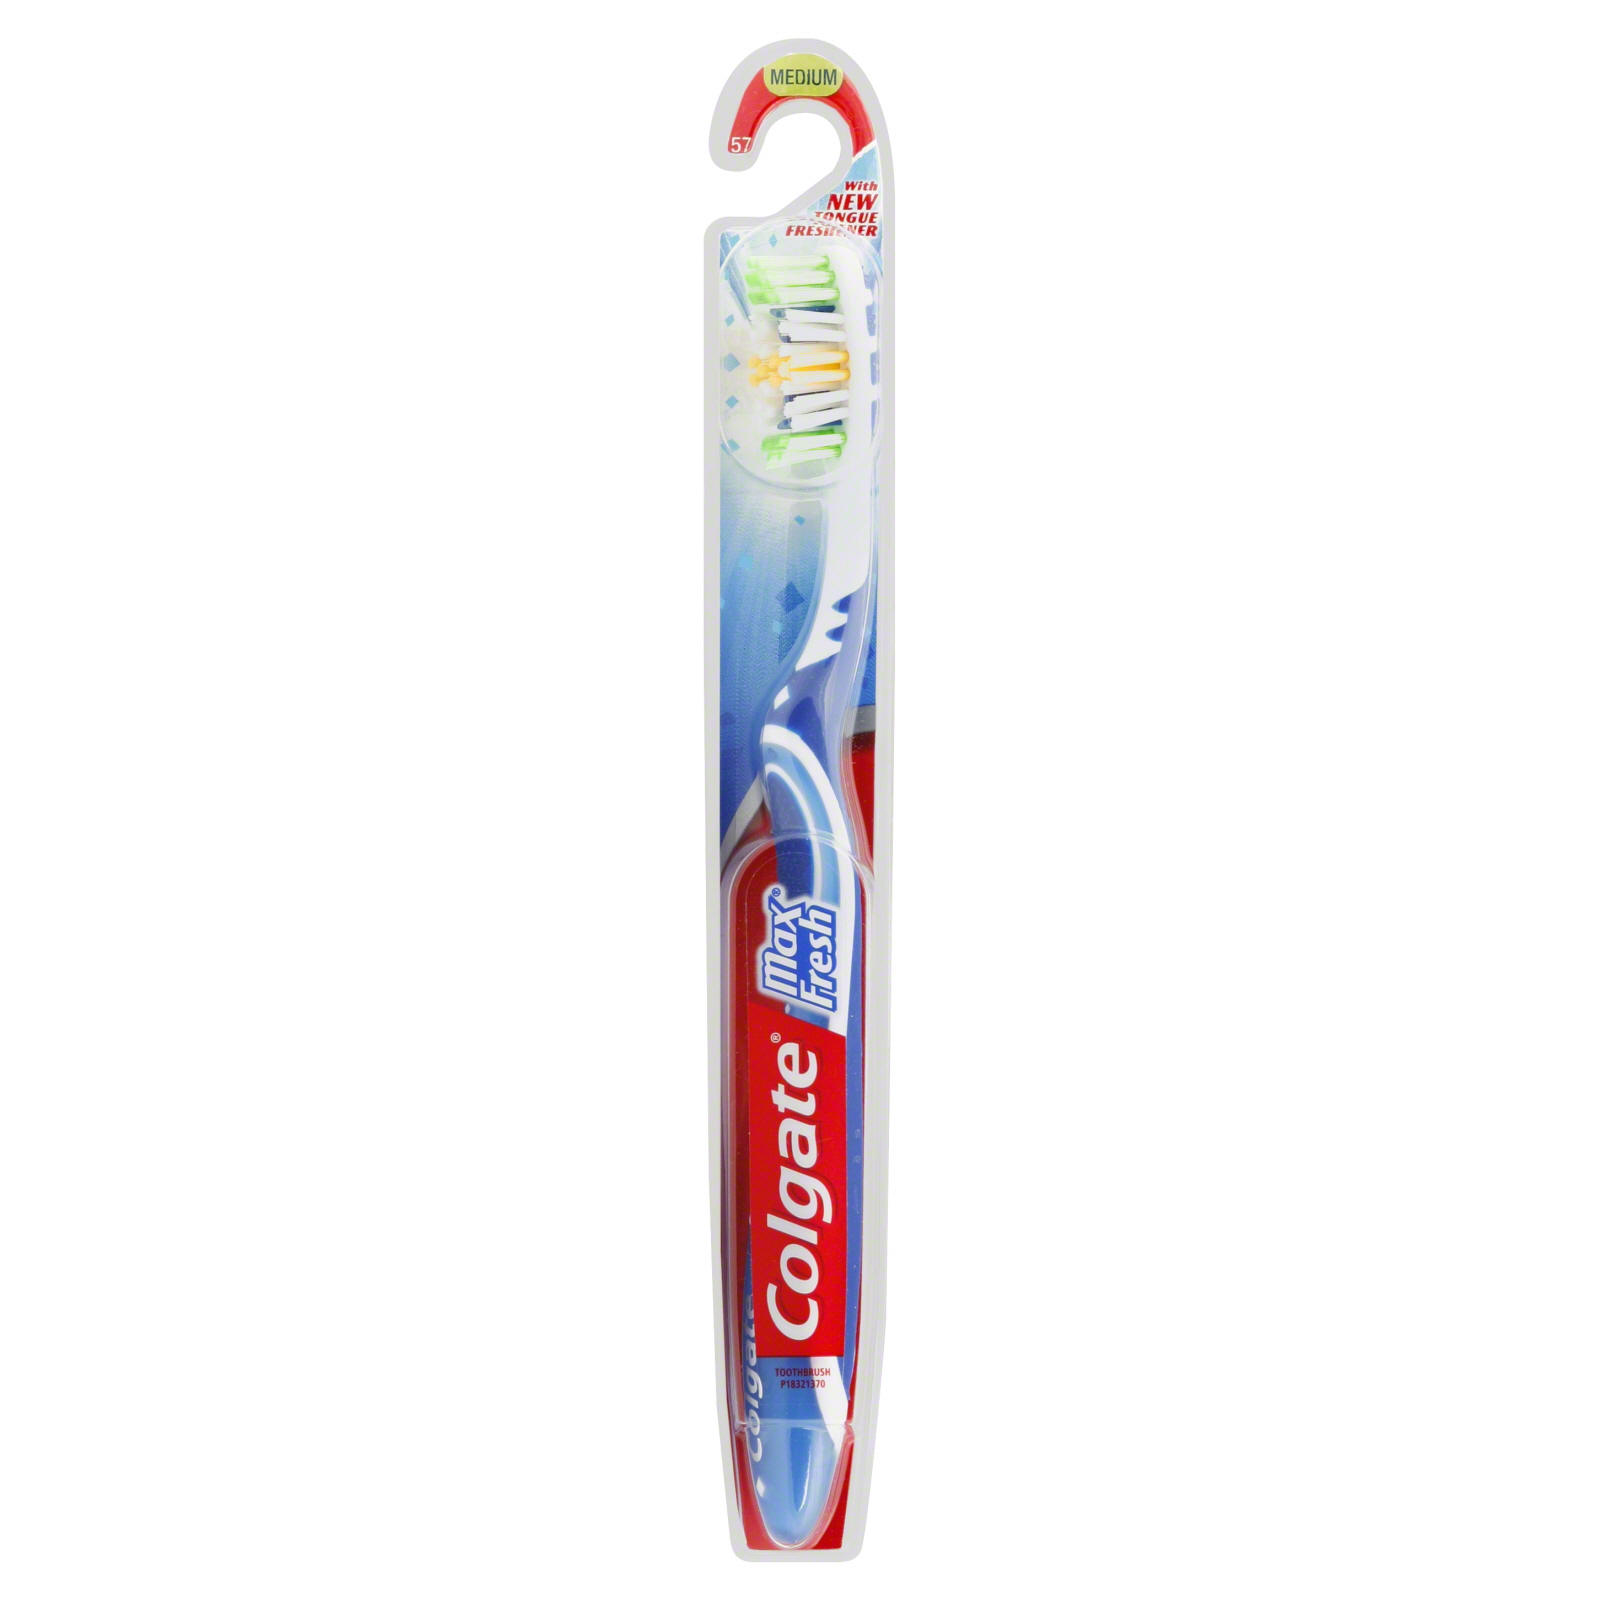 Colgate-Palmolive MaxFresh Toothbrush, Medium, Full Head 57, 1 toothbrush